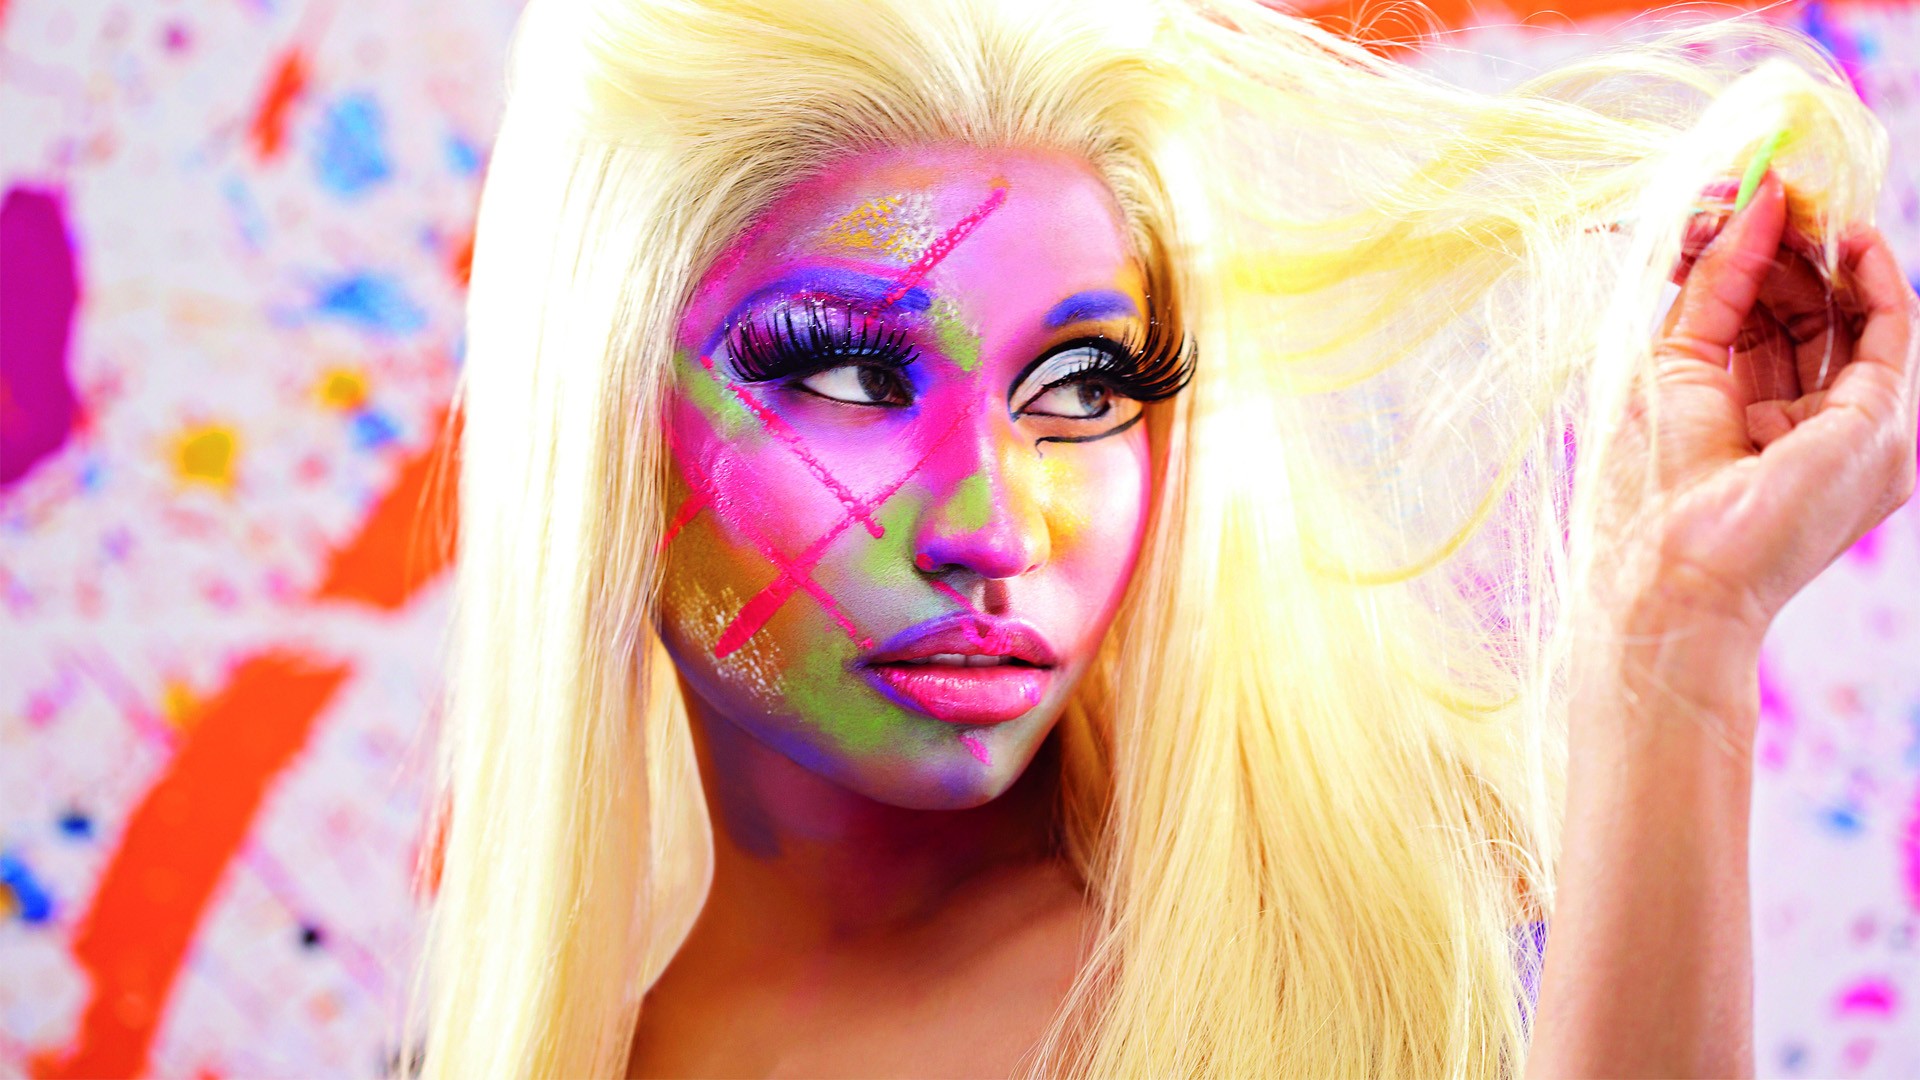 Nicki Minaj Face Paint Blonde Singer Women Model Body Paint 1920x1080